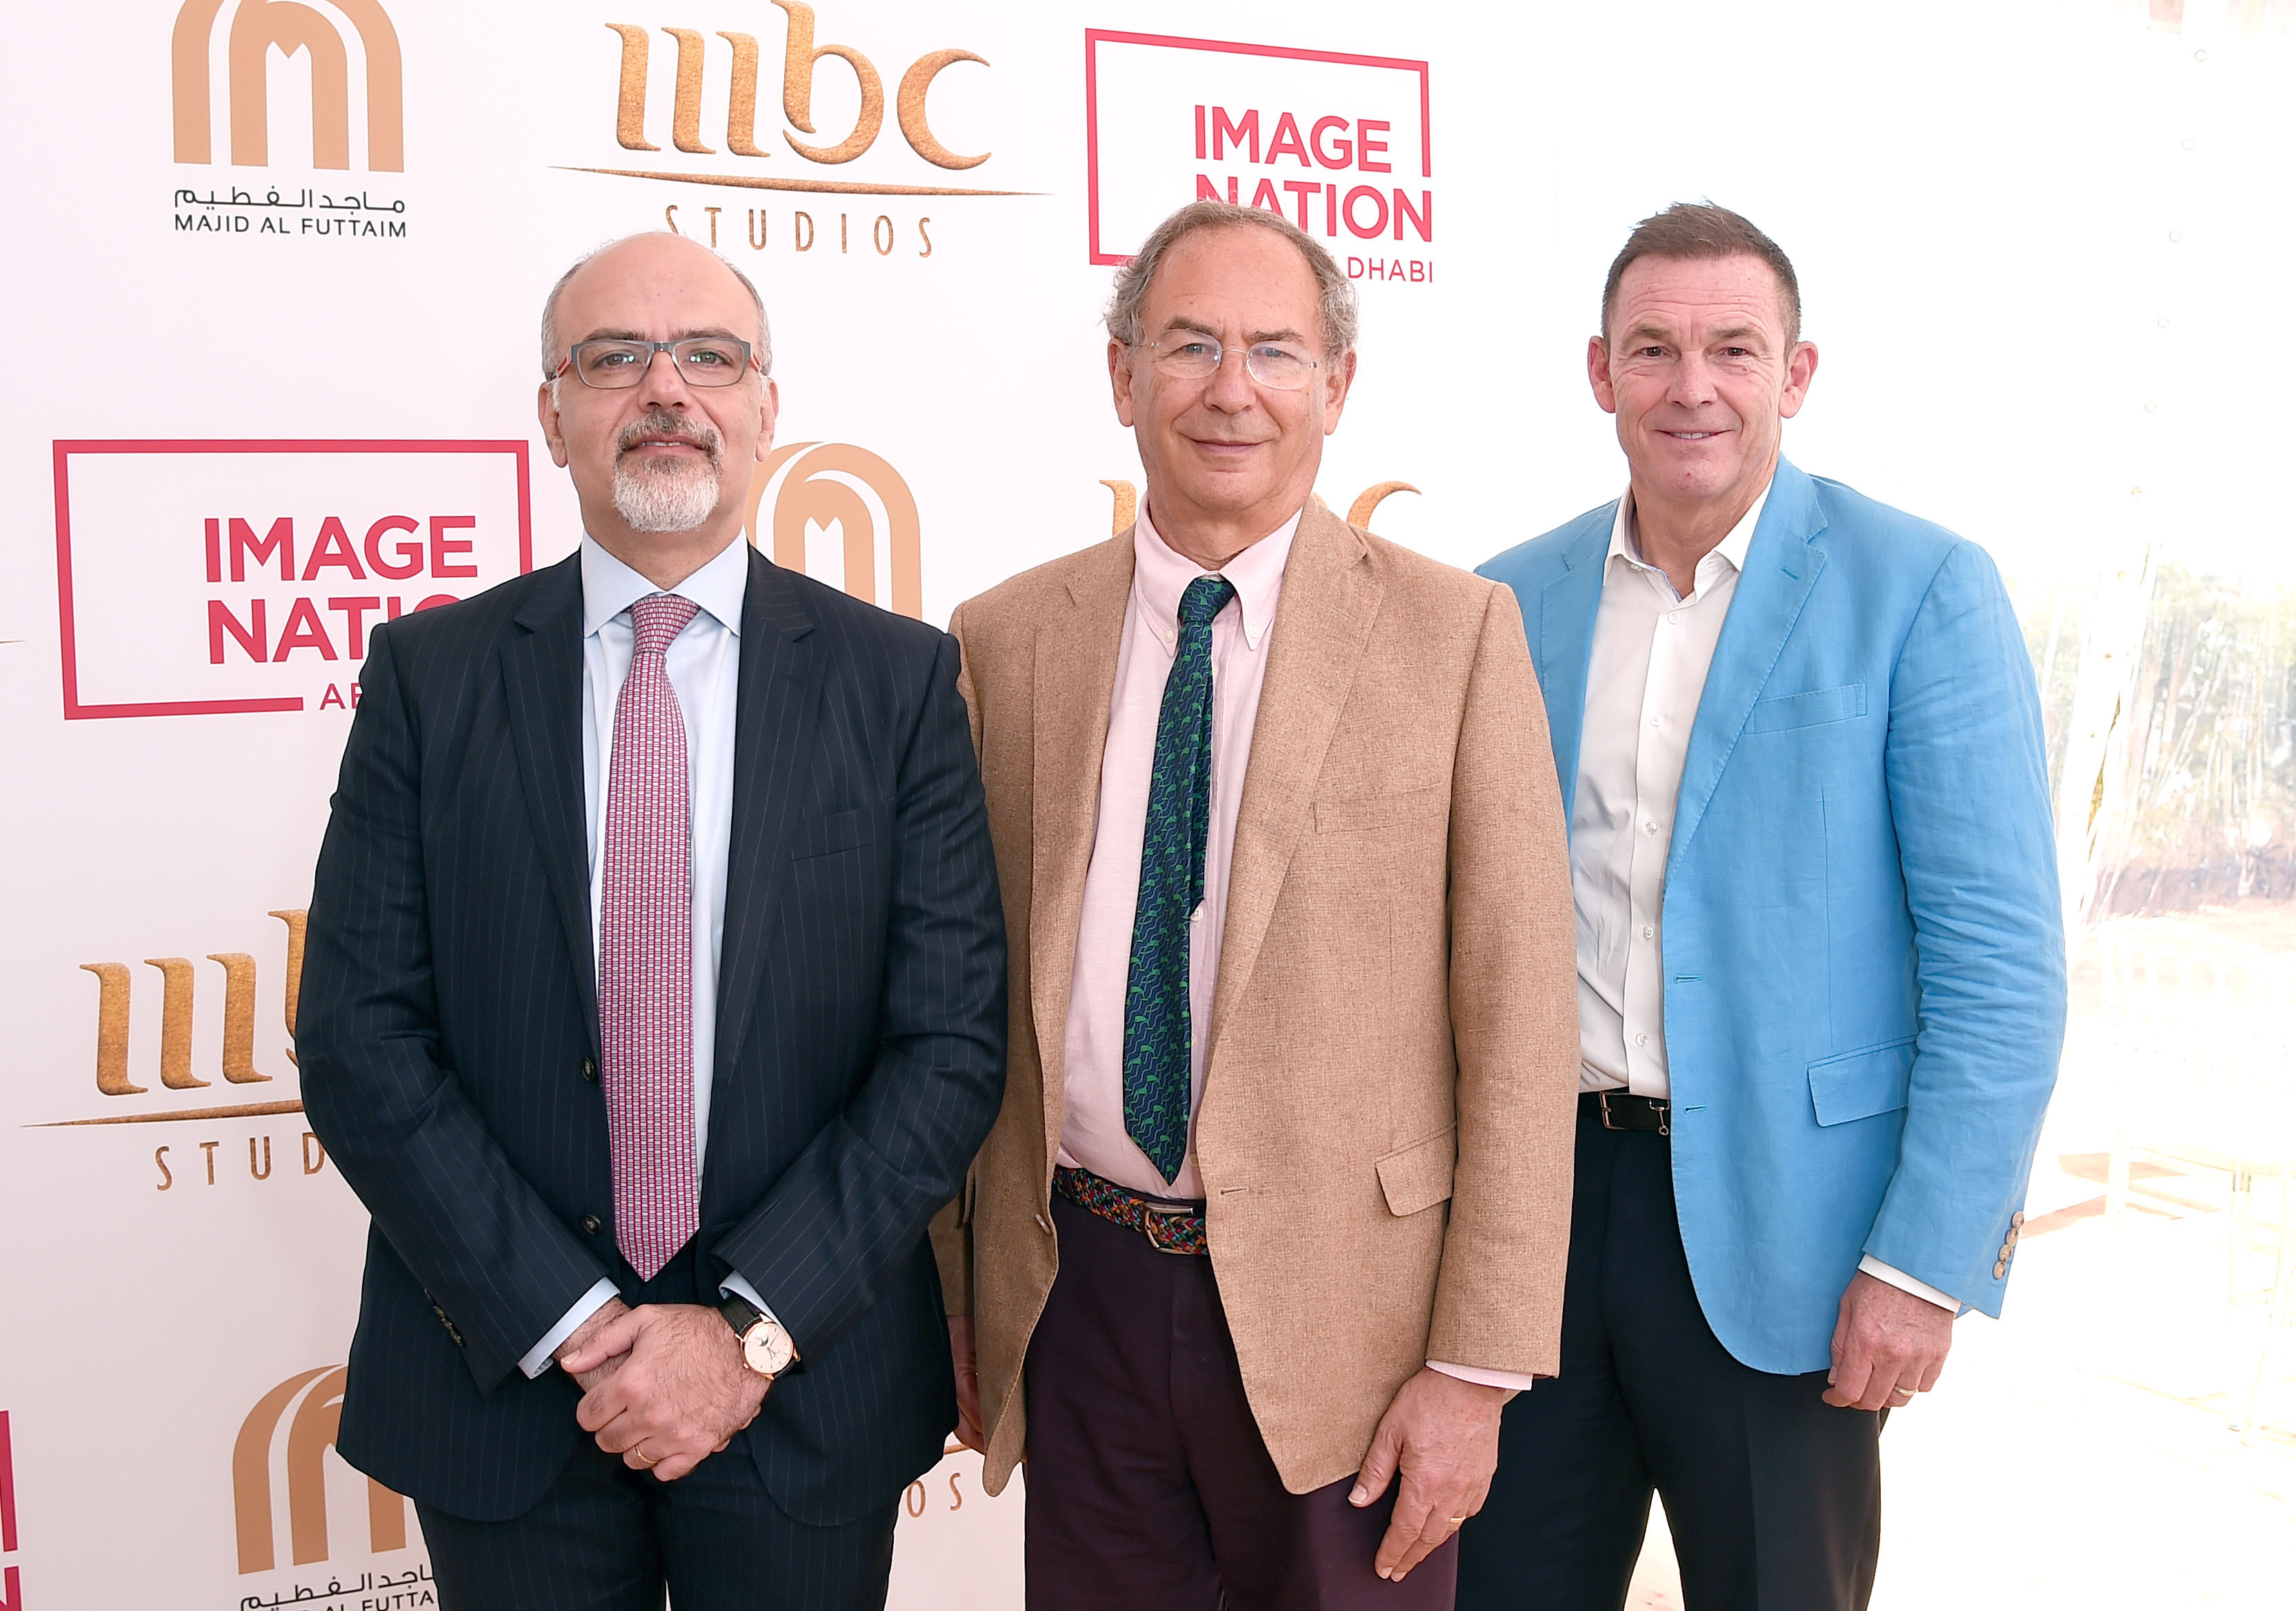 Nation Abu Dhabi, Majid al Futtaim and MBC Studios Signs Partnership